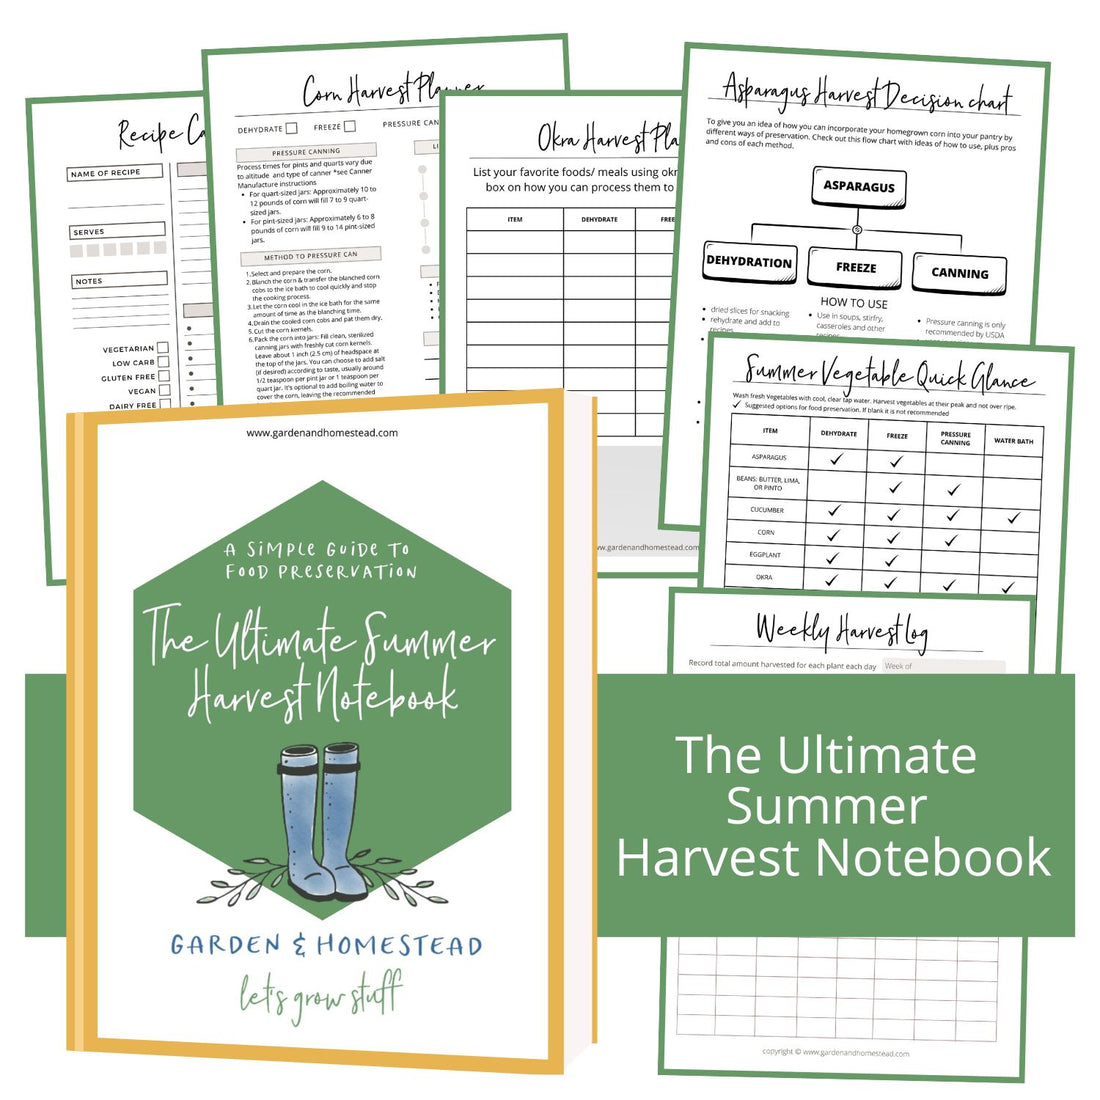 The Ultimate Summer Harvest Notebook